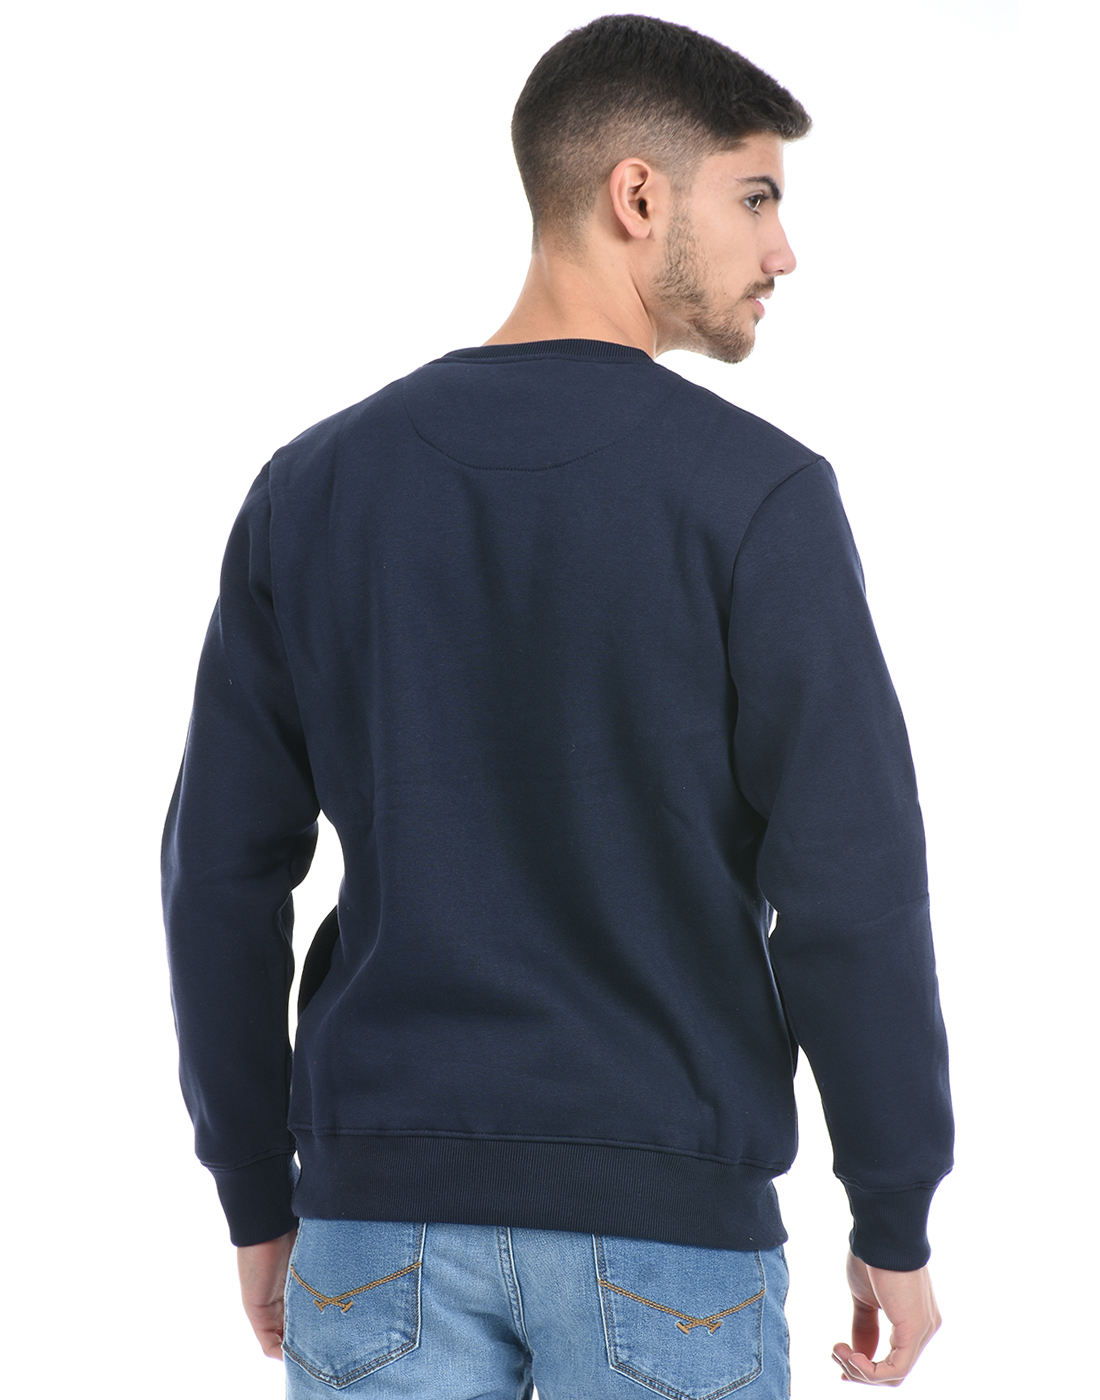 Cloak & Decker by Monte Carlo Men Printed Blue Sweatshirt